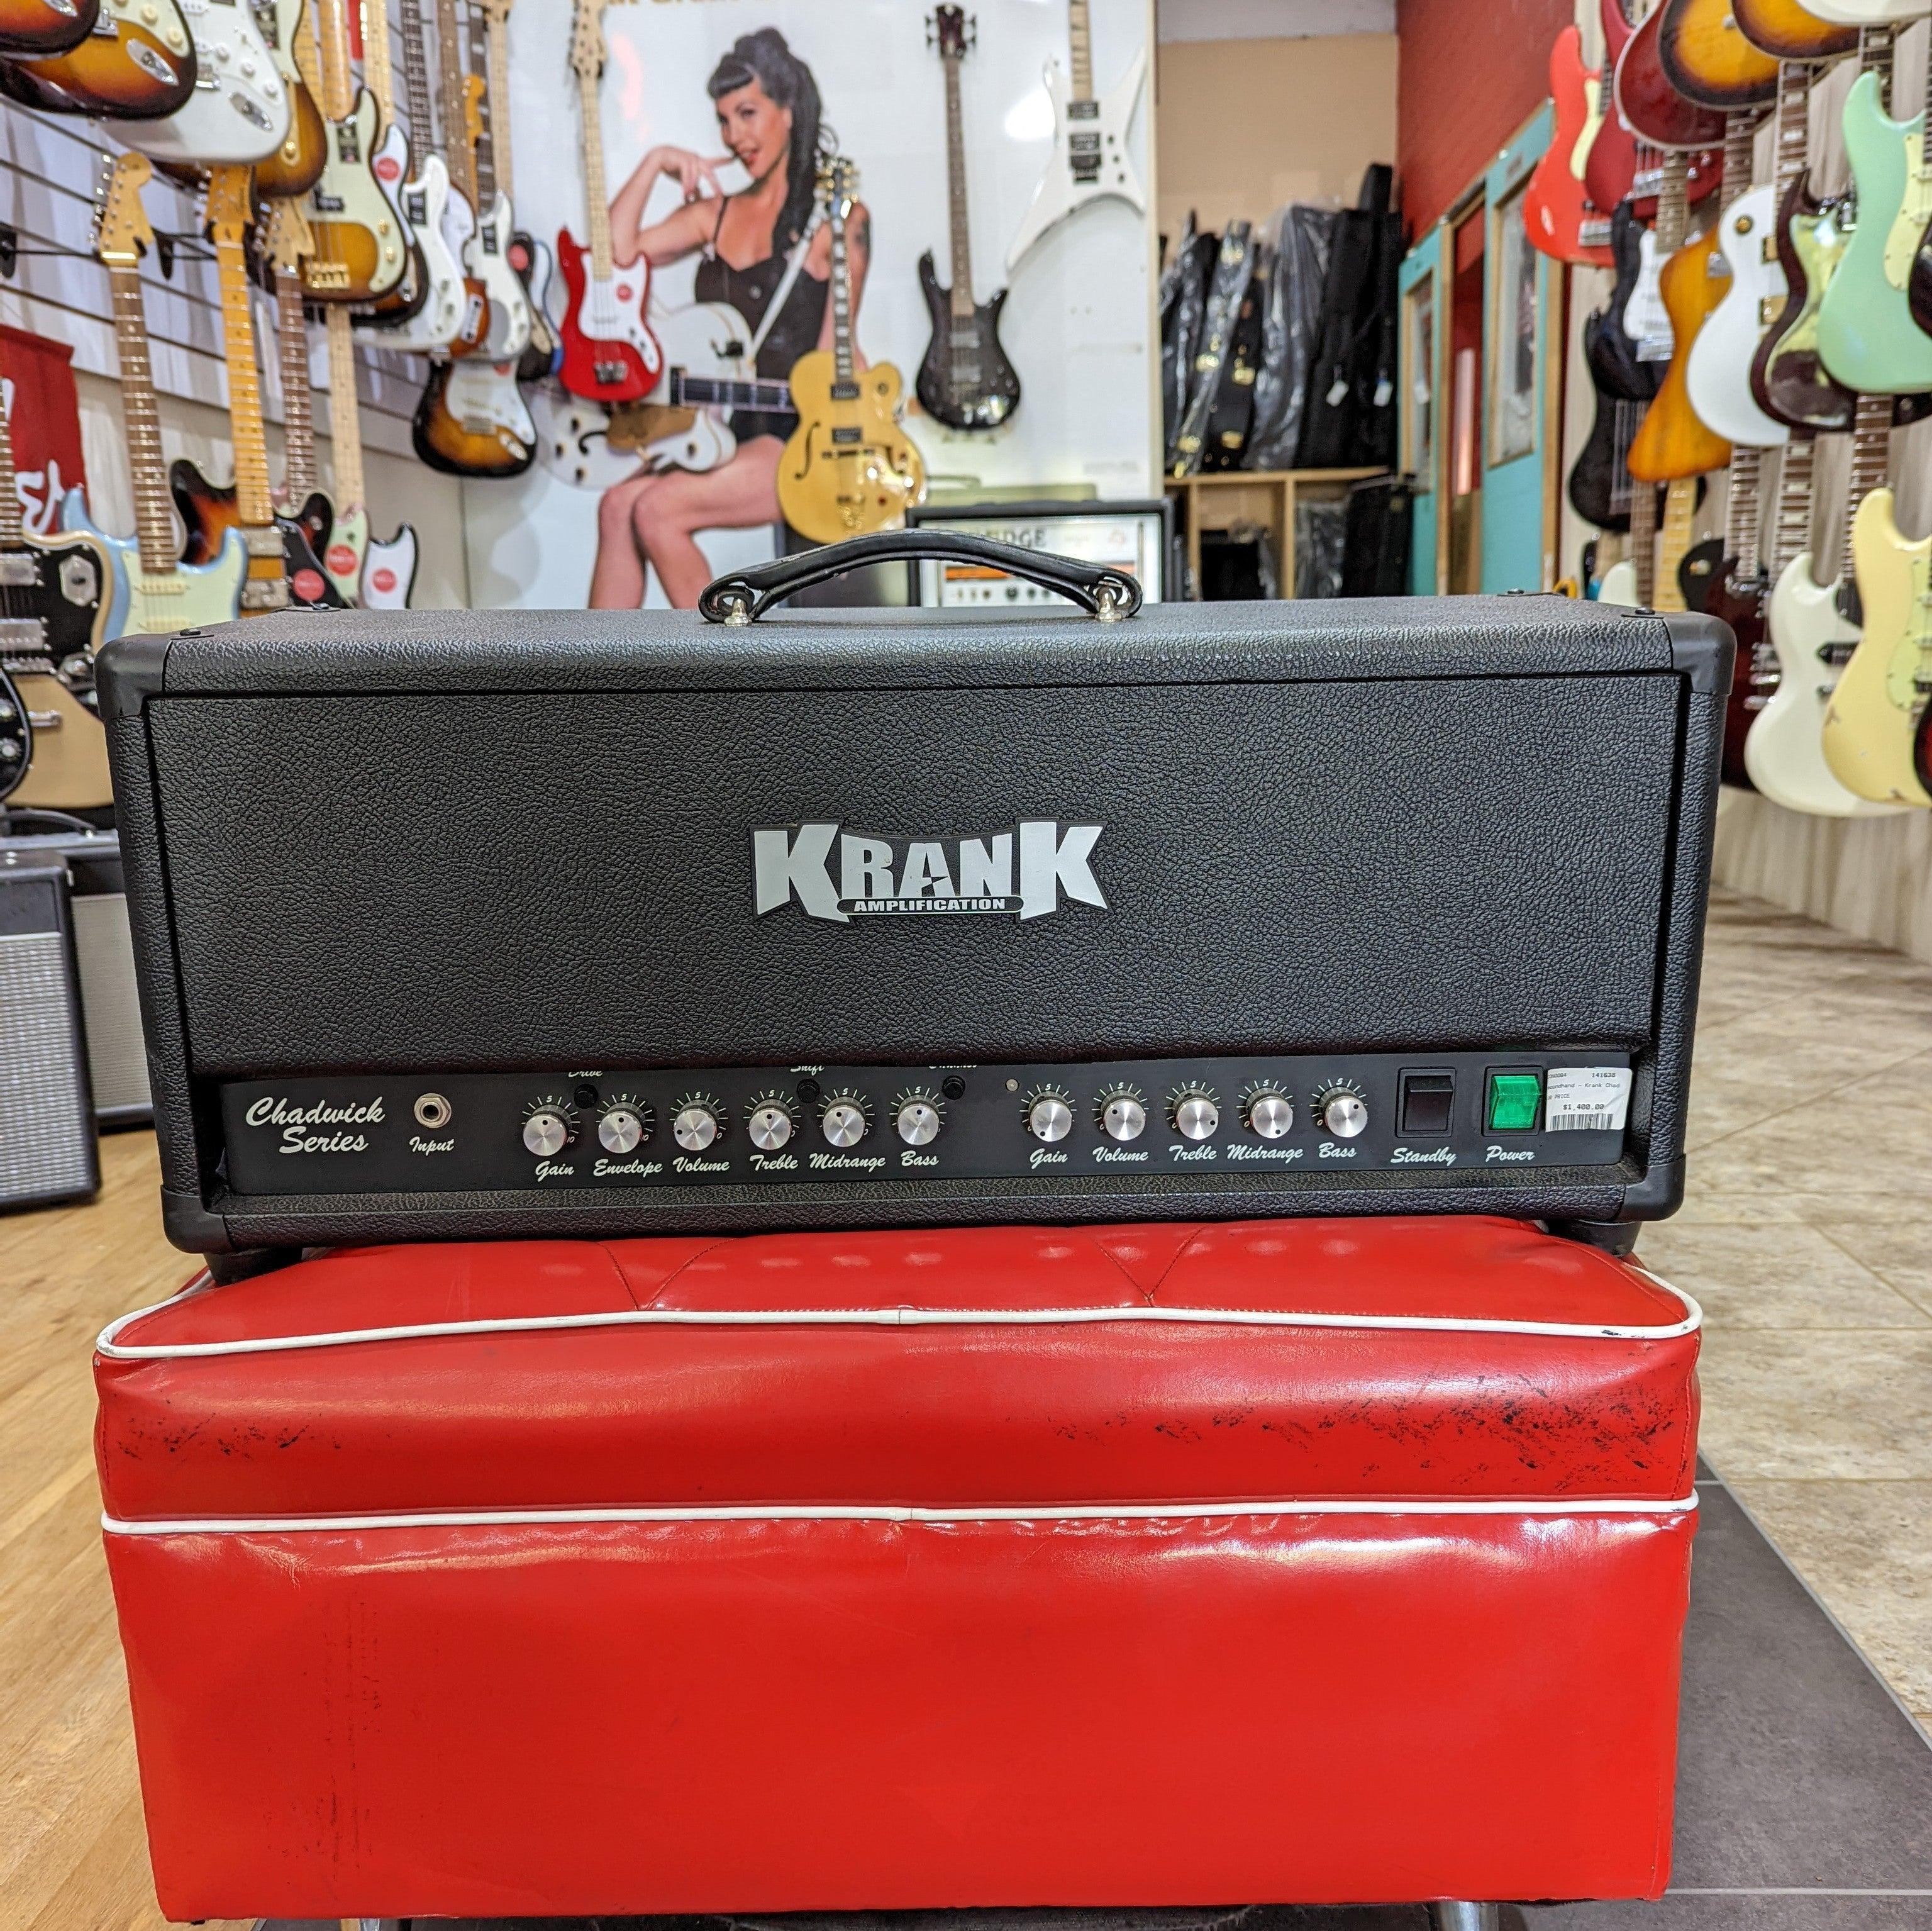 Krank Chadwick Series 50 watt Valve Guitar Head - Guitars - Amplifiers by Krank at Muso's Stuff